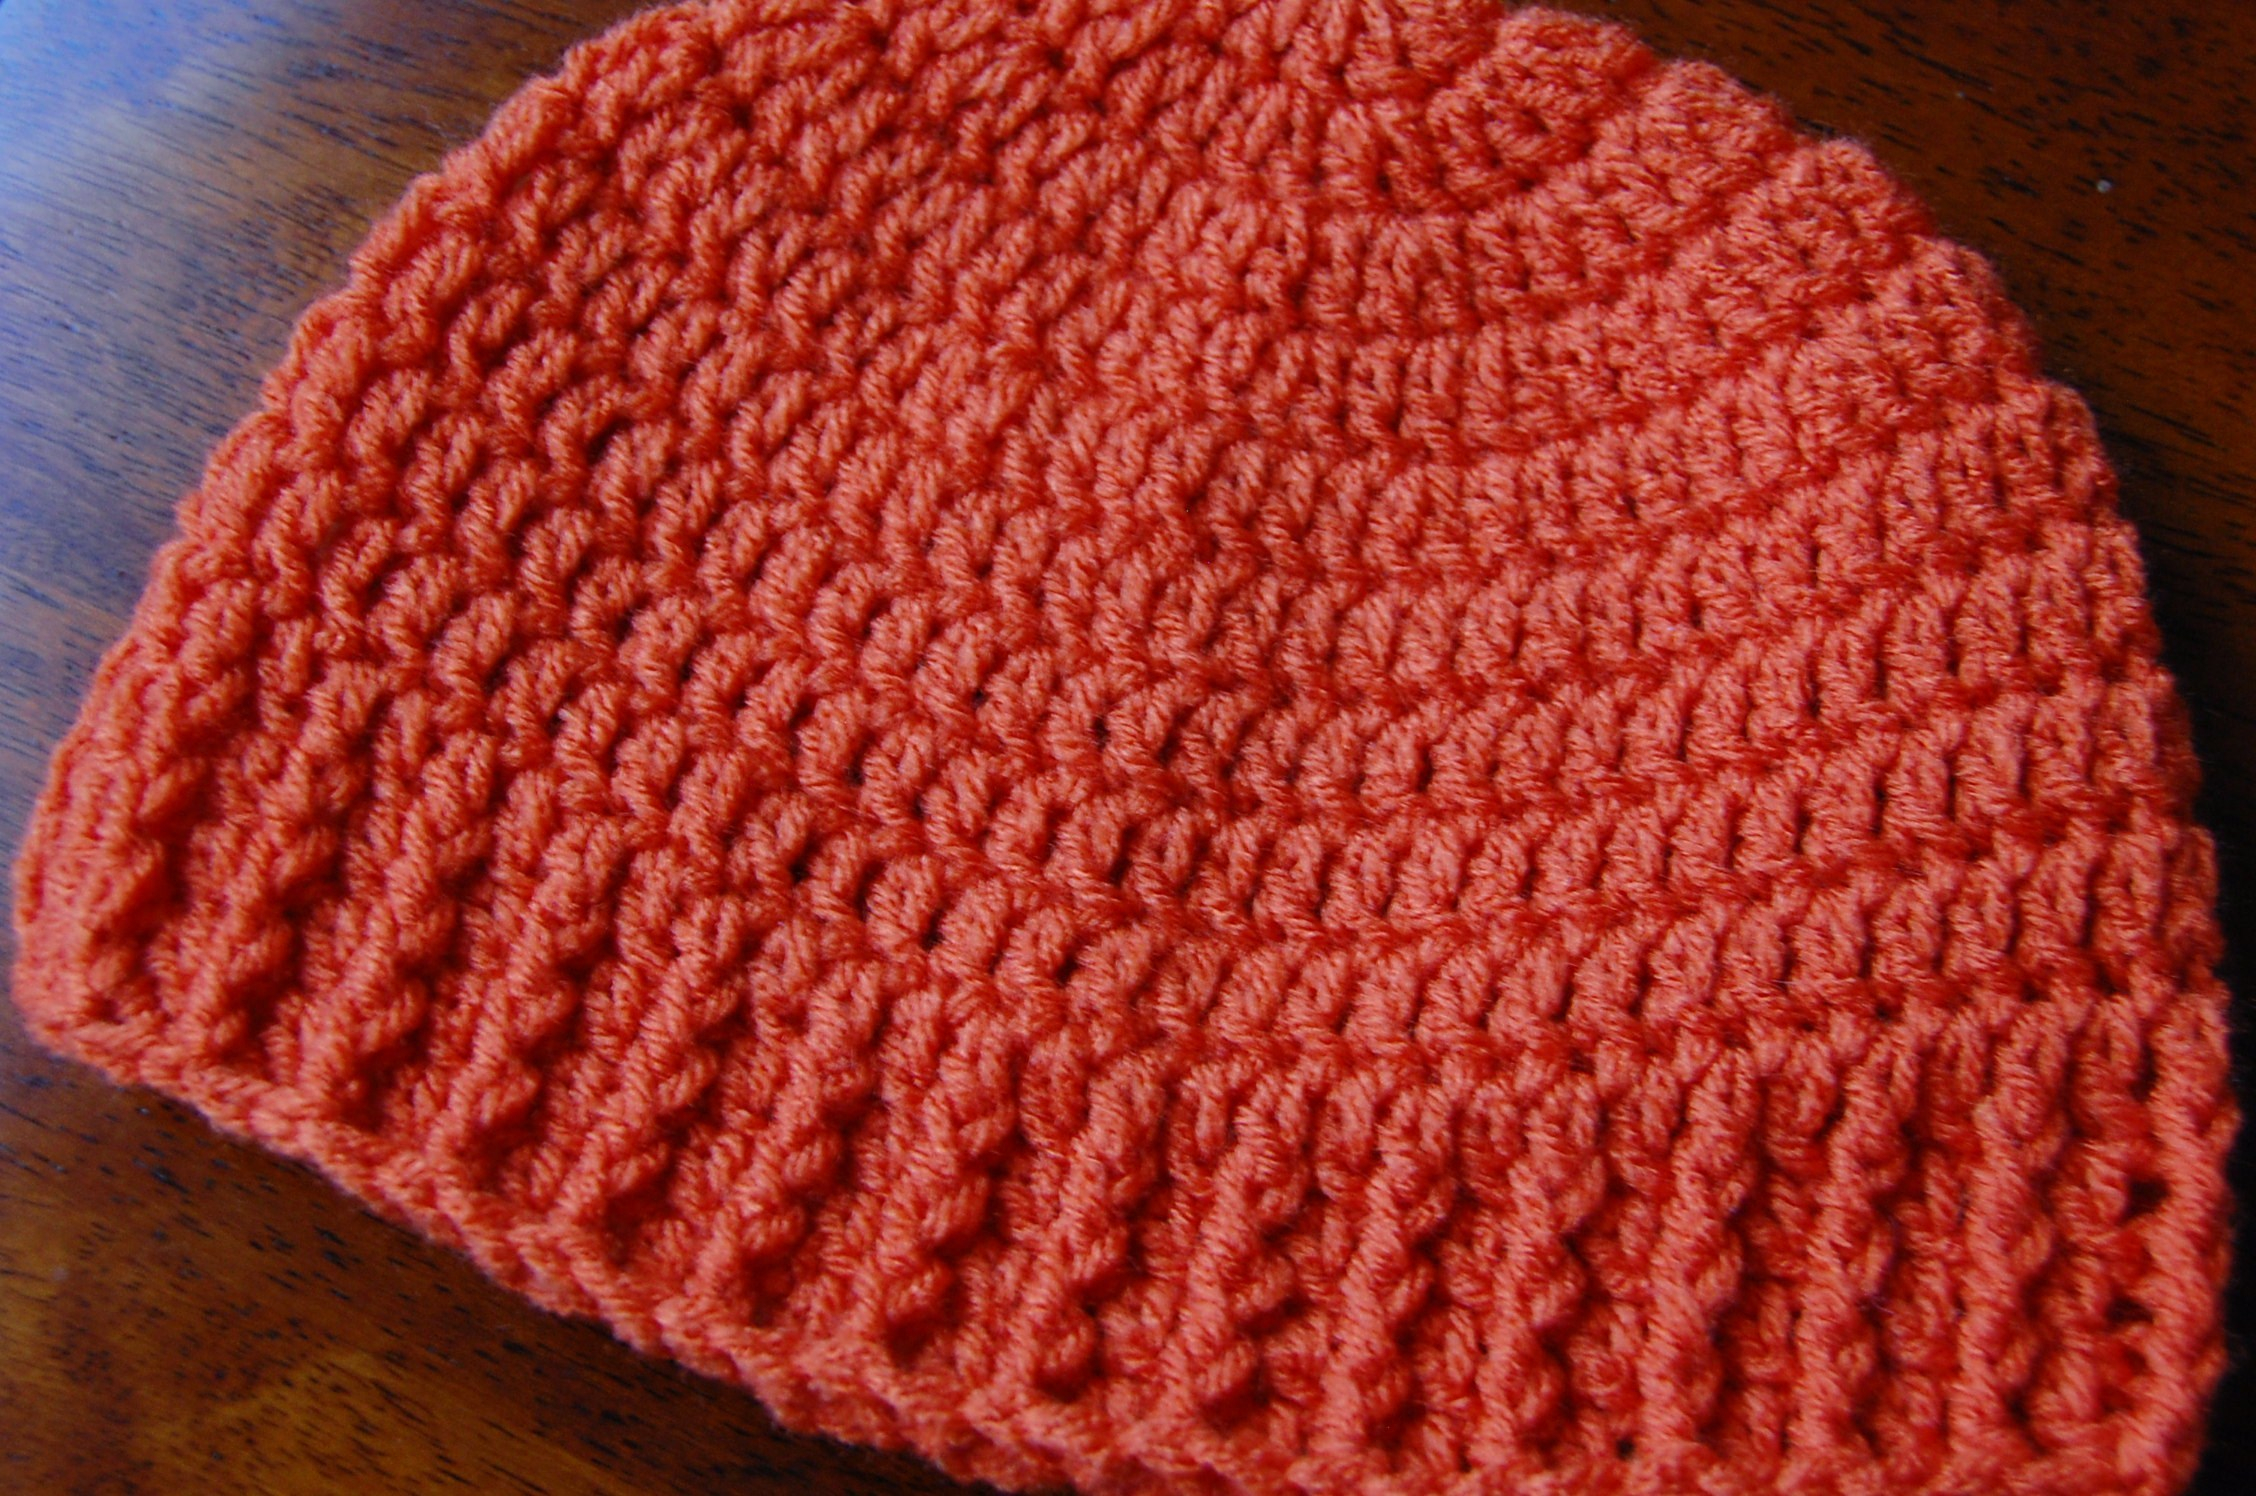 Free Crochet Hat Patterns Free Crochet Knit Patterns At Jjcrochets Blog